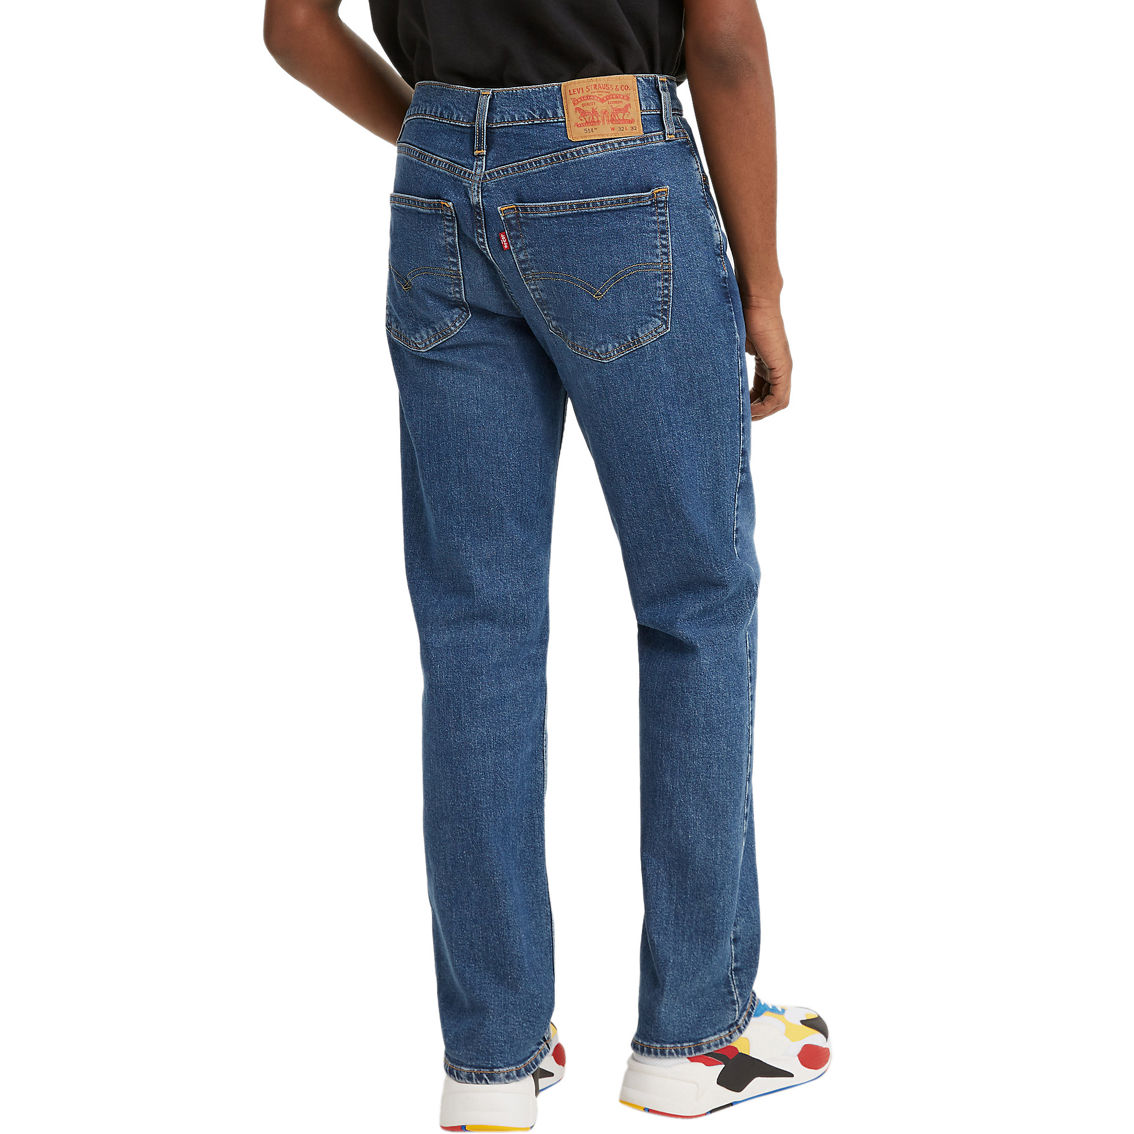 Levi's 514 Straight Fit Flex Jeans - Image 2 of 3